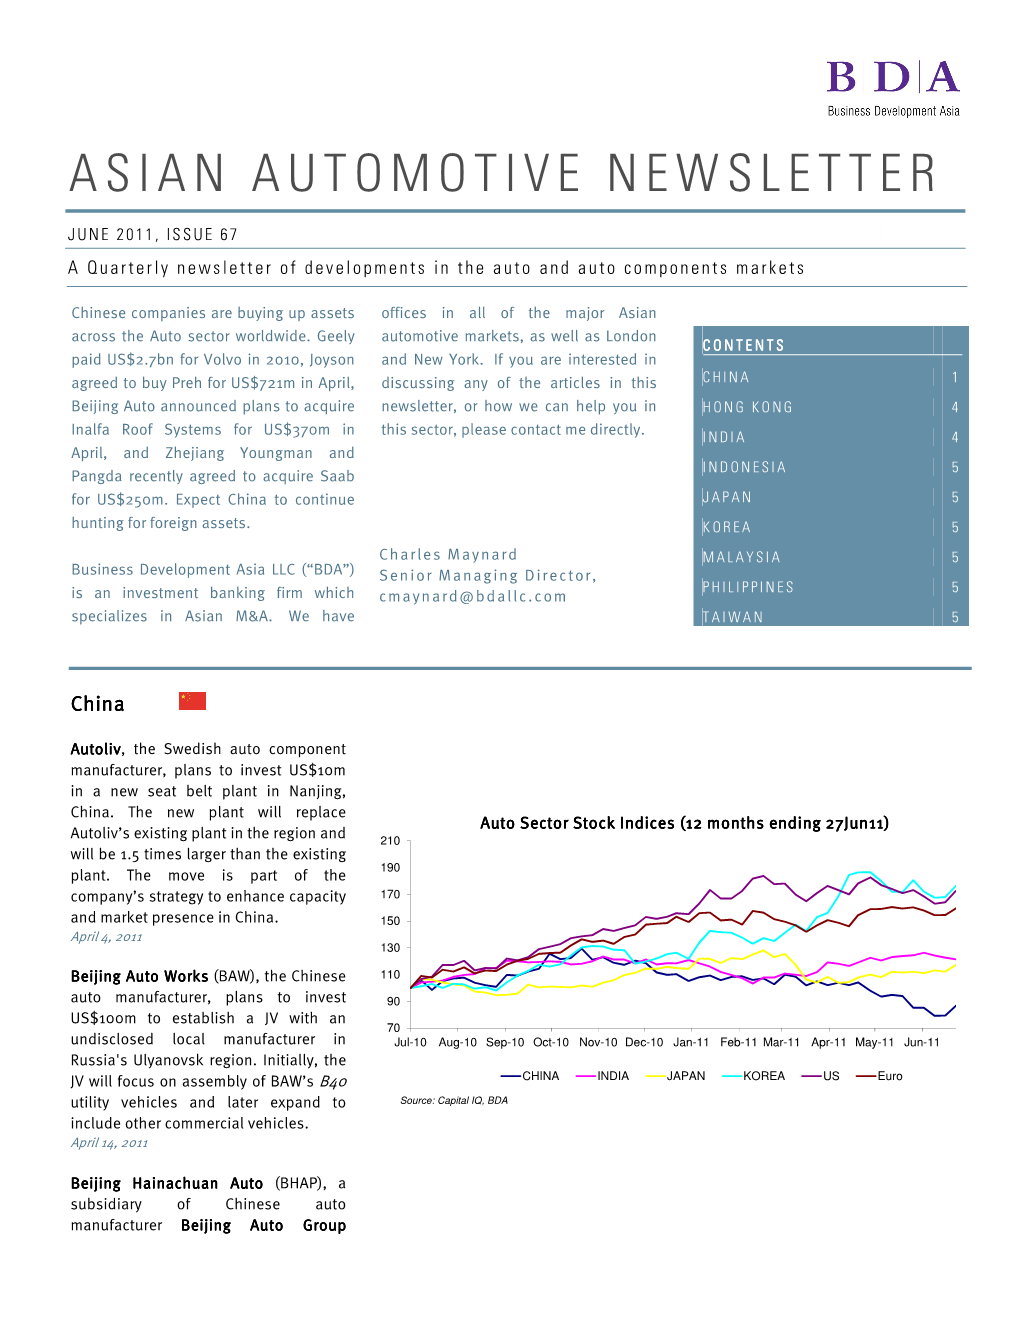 Asian Automotive Newsletter